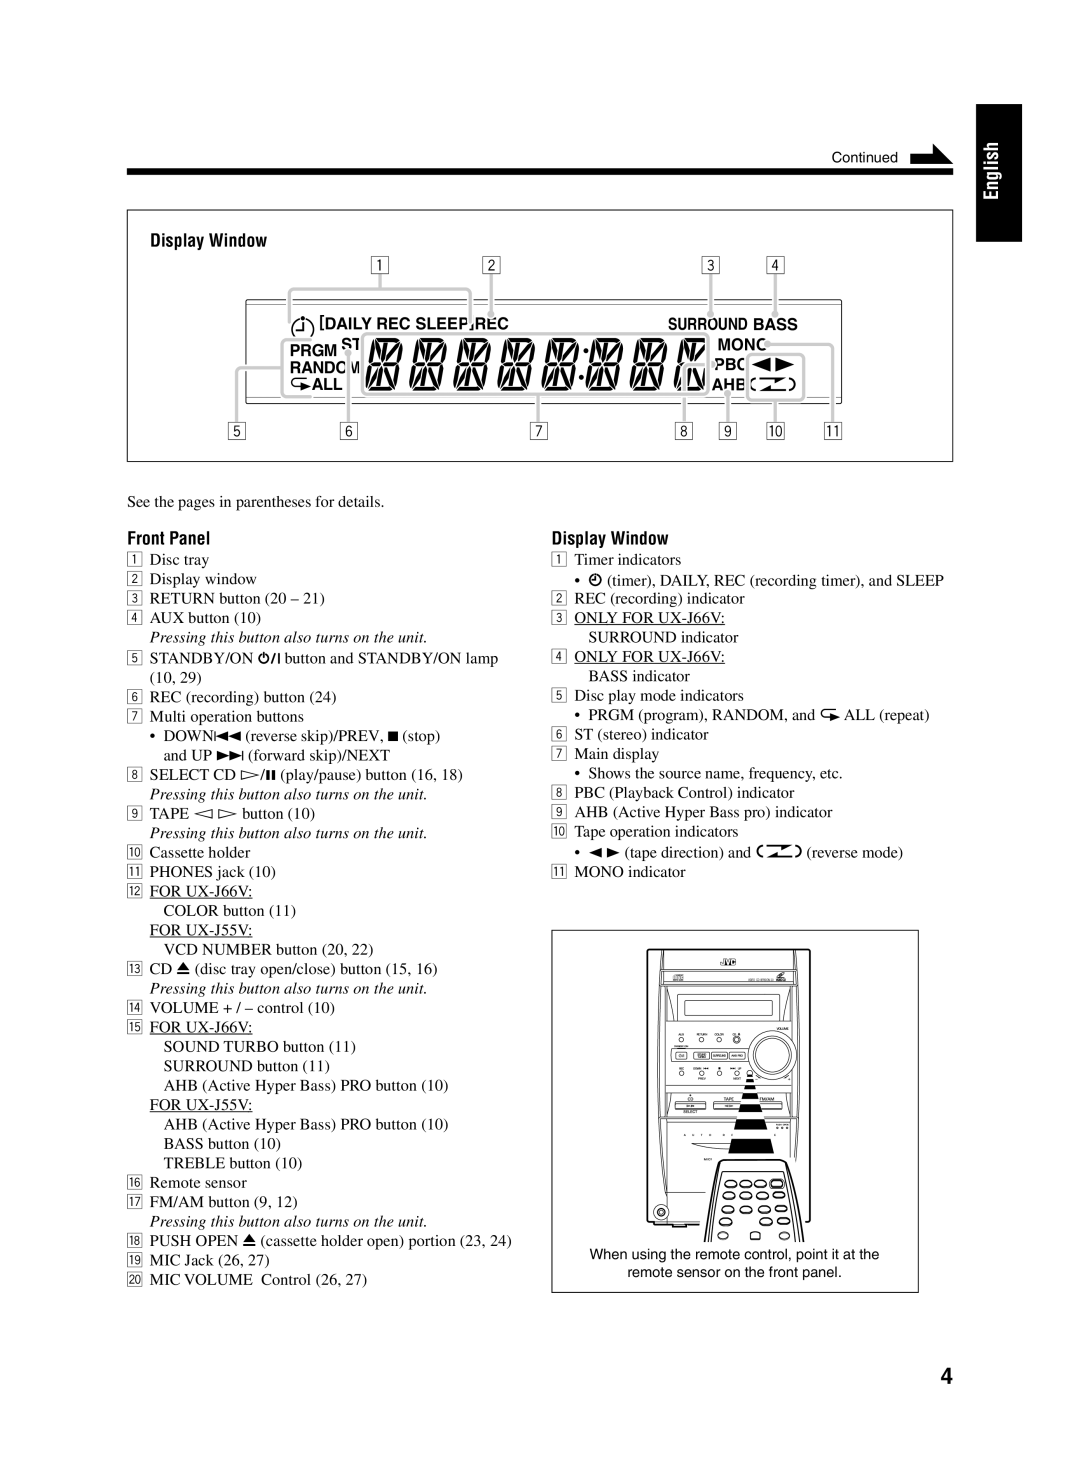 JVC UX-J55V manual 8 9 p q, Display Window, Random, Pressing this button also turns on the unit, English, Front Panel, Mono 